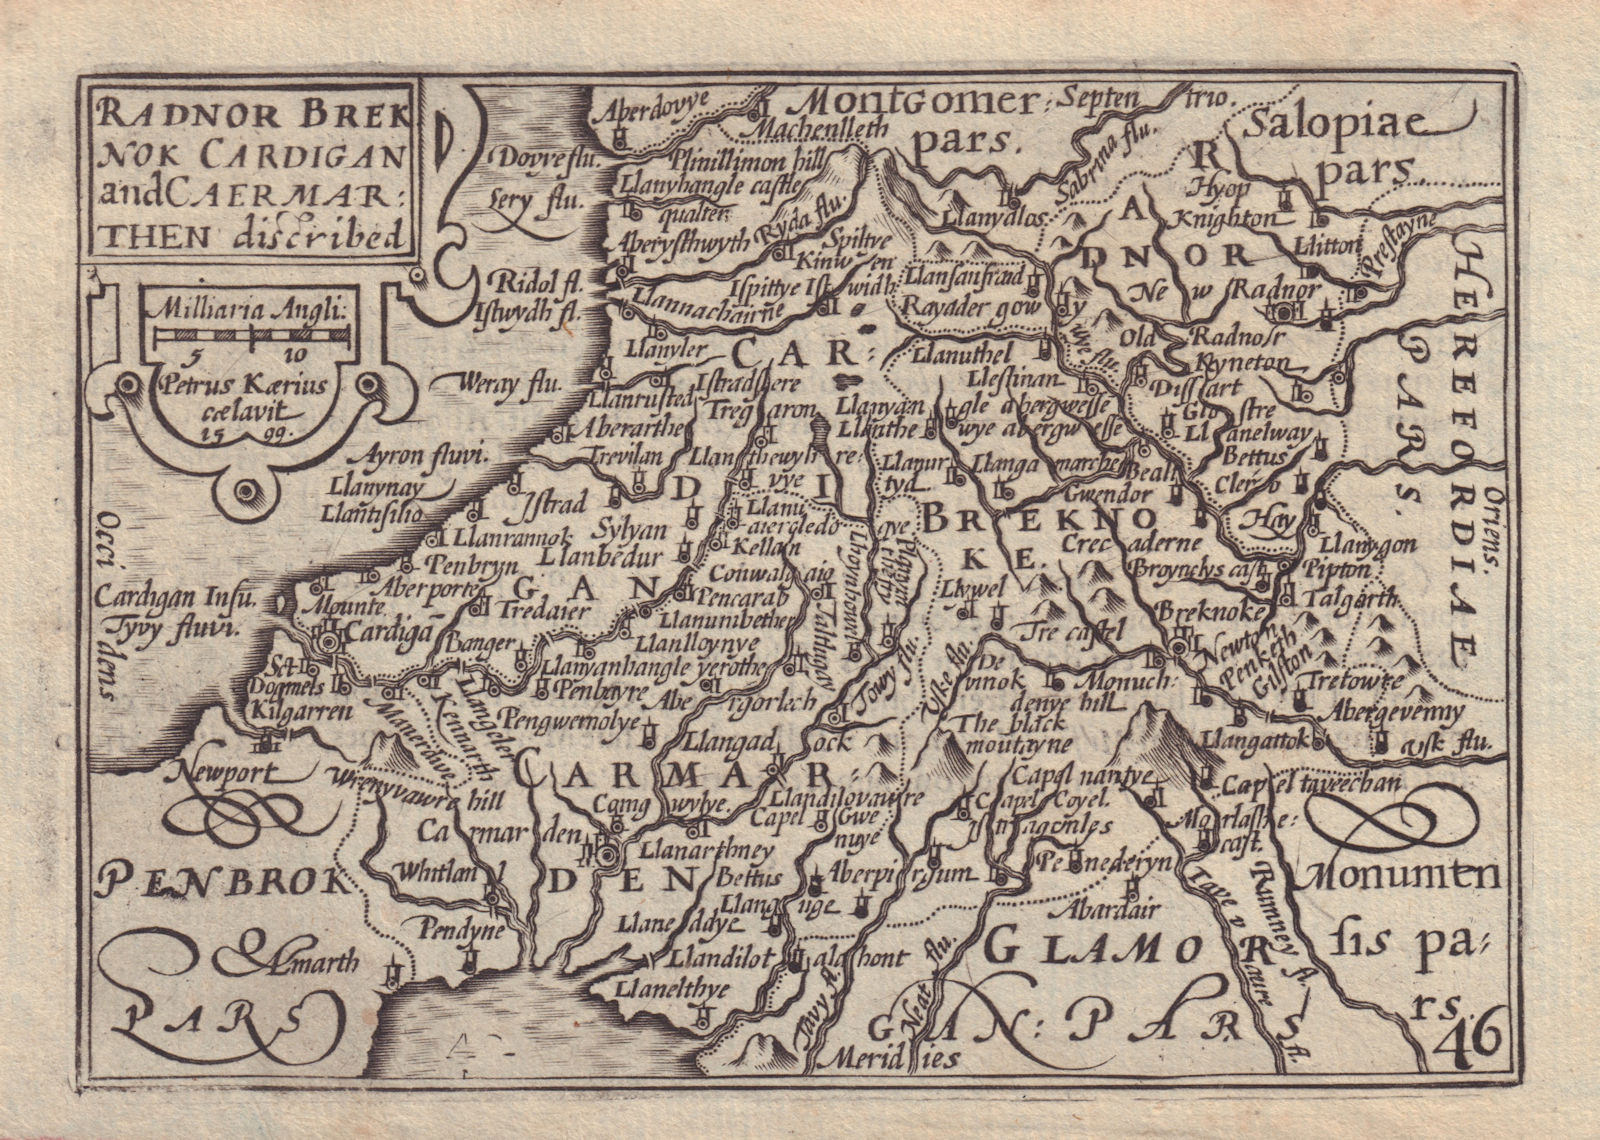 Radnor Breknok Cardigan & Caermarthen by Keere. "Speed miniature" Wales 1632 map